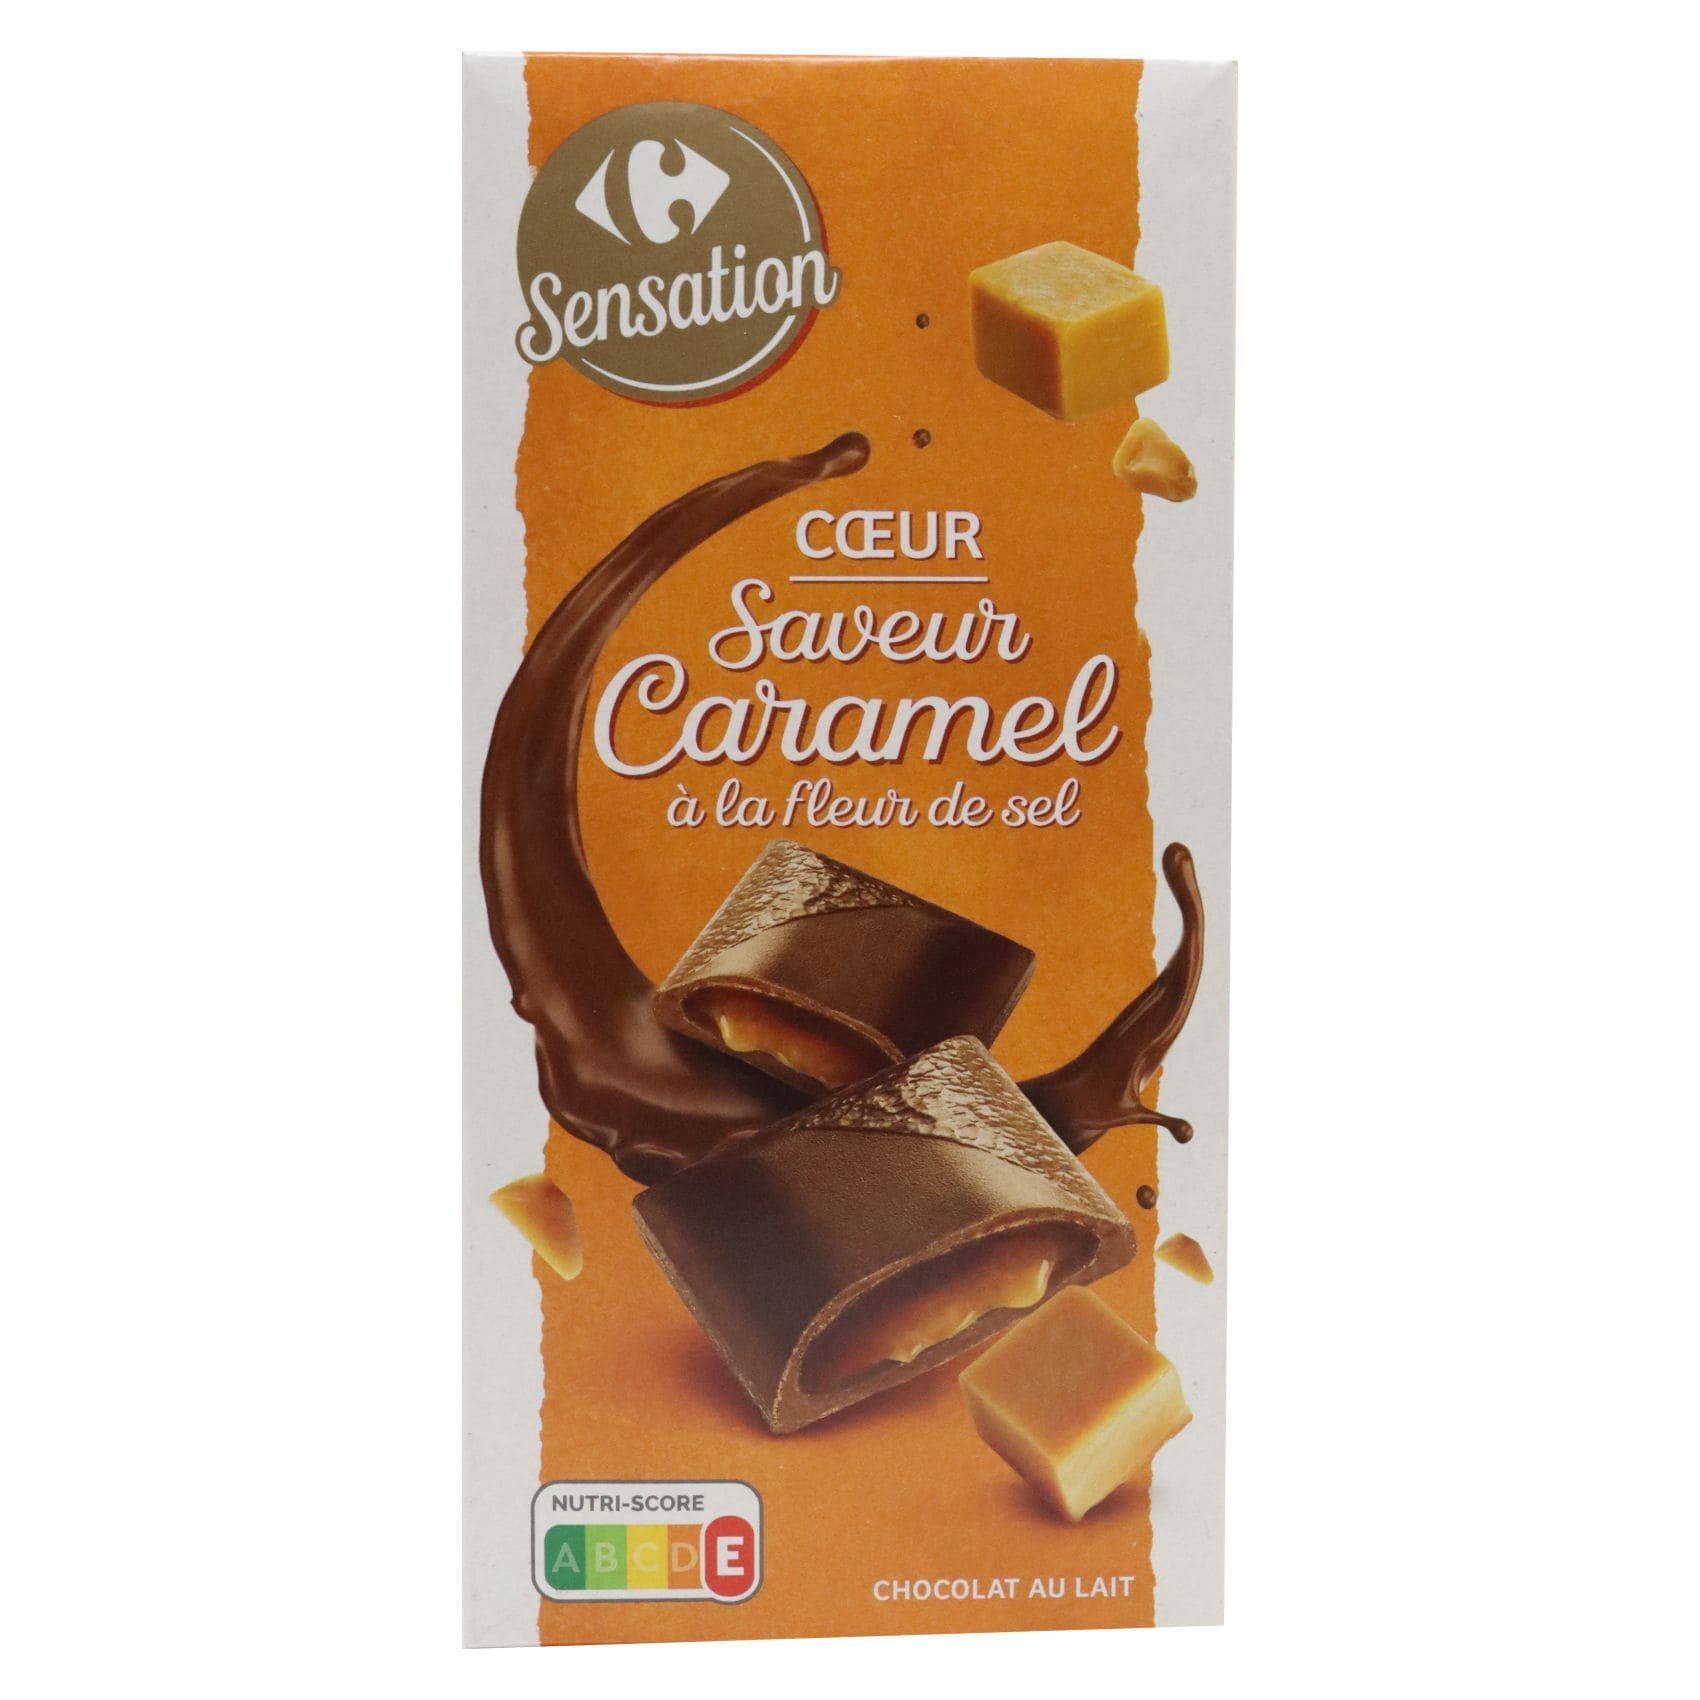 Bonbons Caram'choc chocolat/caramel CARREFOUR SENSATION